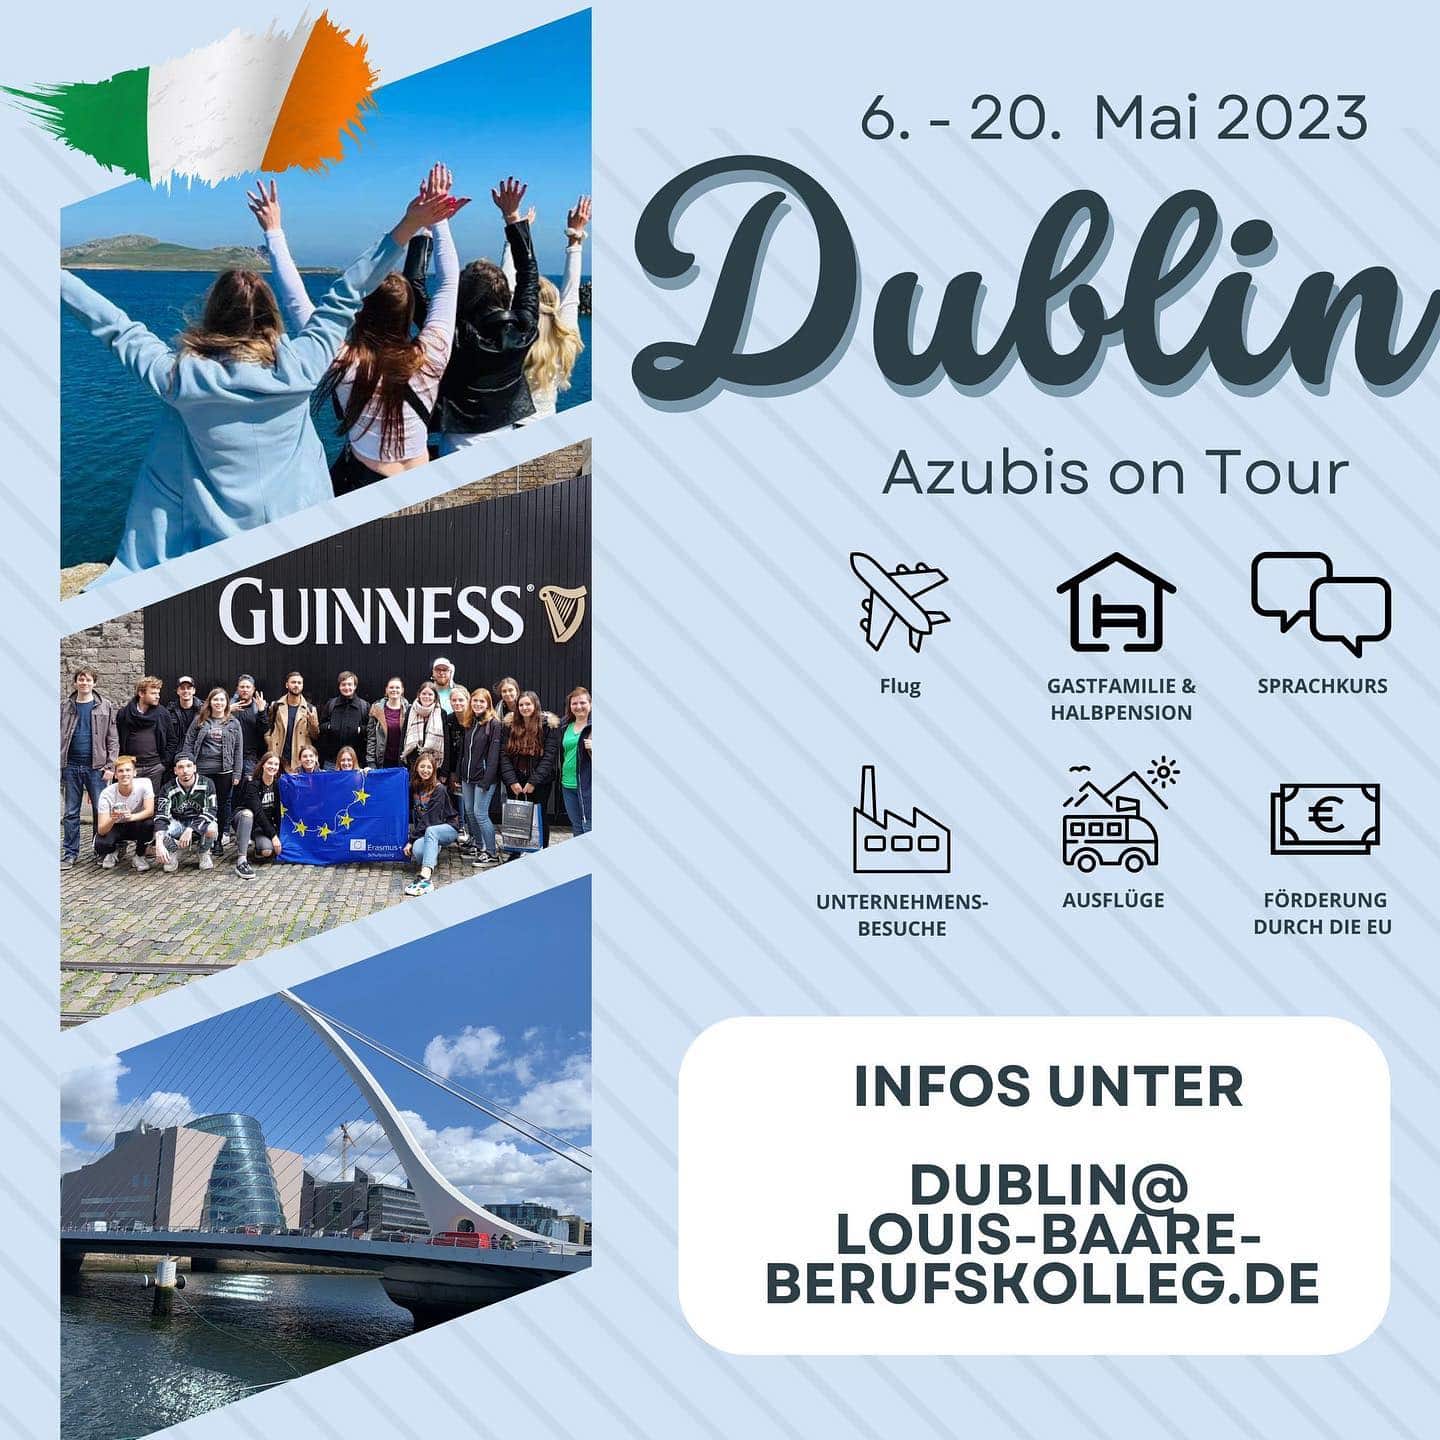 Azubis aufgepasst - Dublin 2023 - Anmeldung ab sofort! 6.-20. Mai 2023 - mit Erasmus+ Stipendium der EU! Näheres unter dublin@louis-baare-berufskolleg.de
#lbbontour #dublin2023 #erasmus